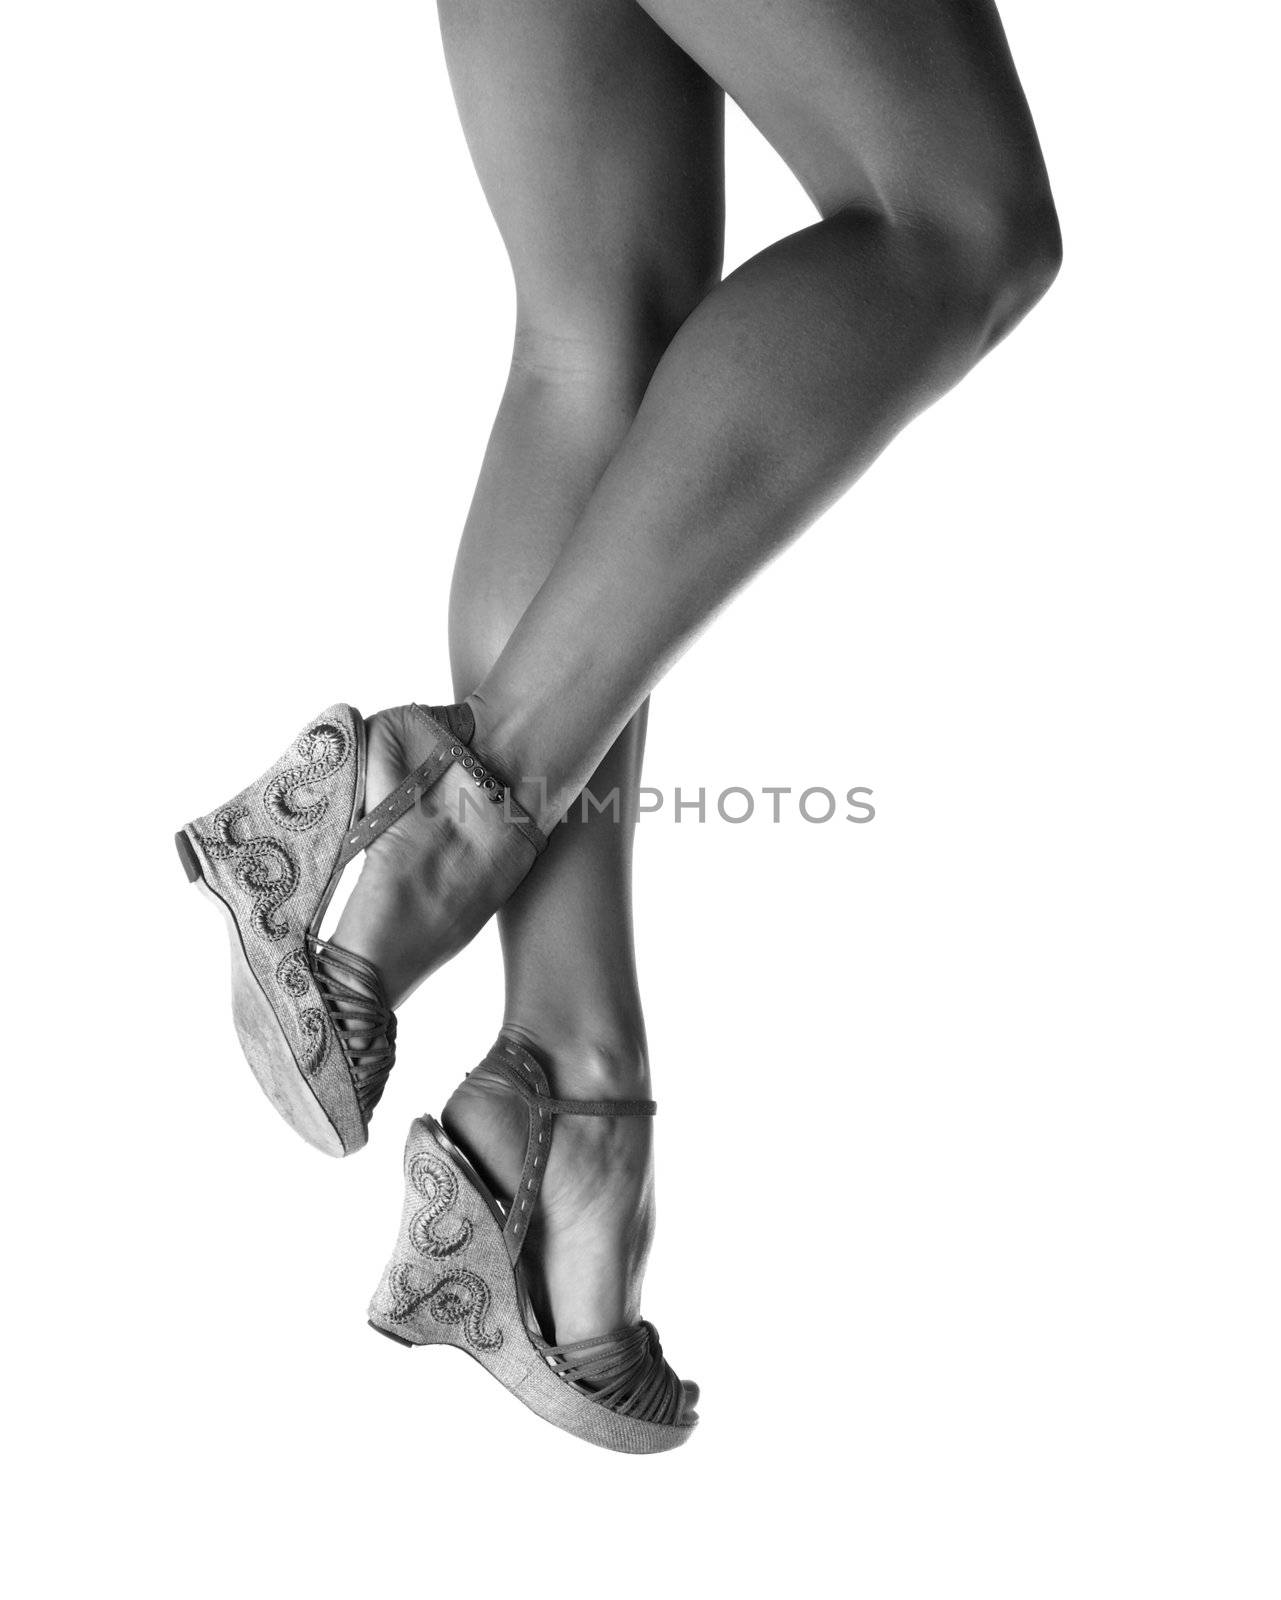 Sexy legs of beautiful woman by shmeljov